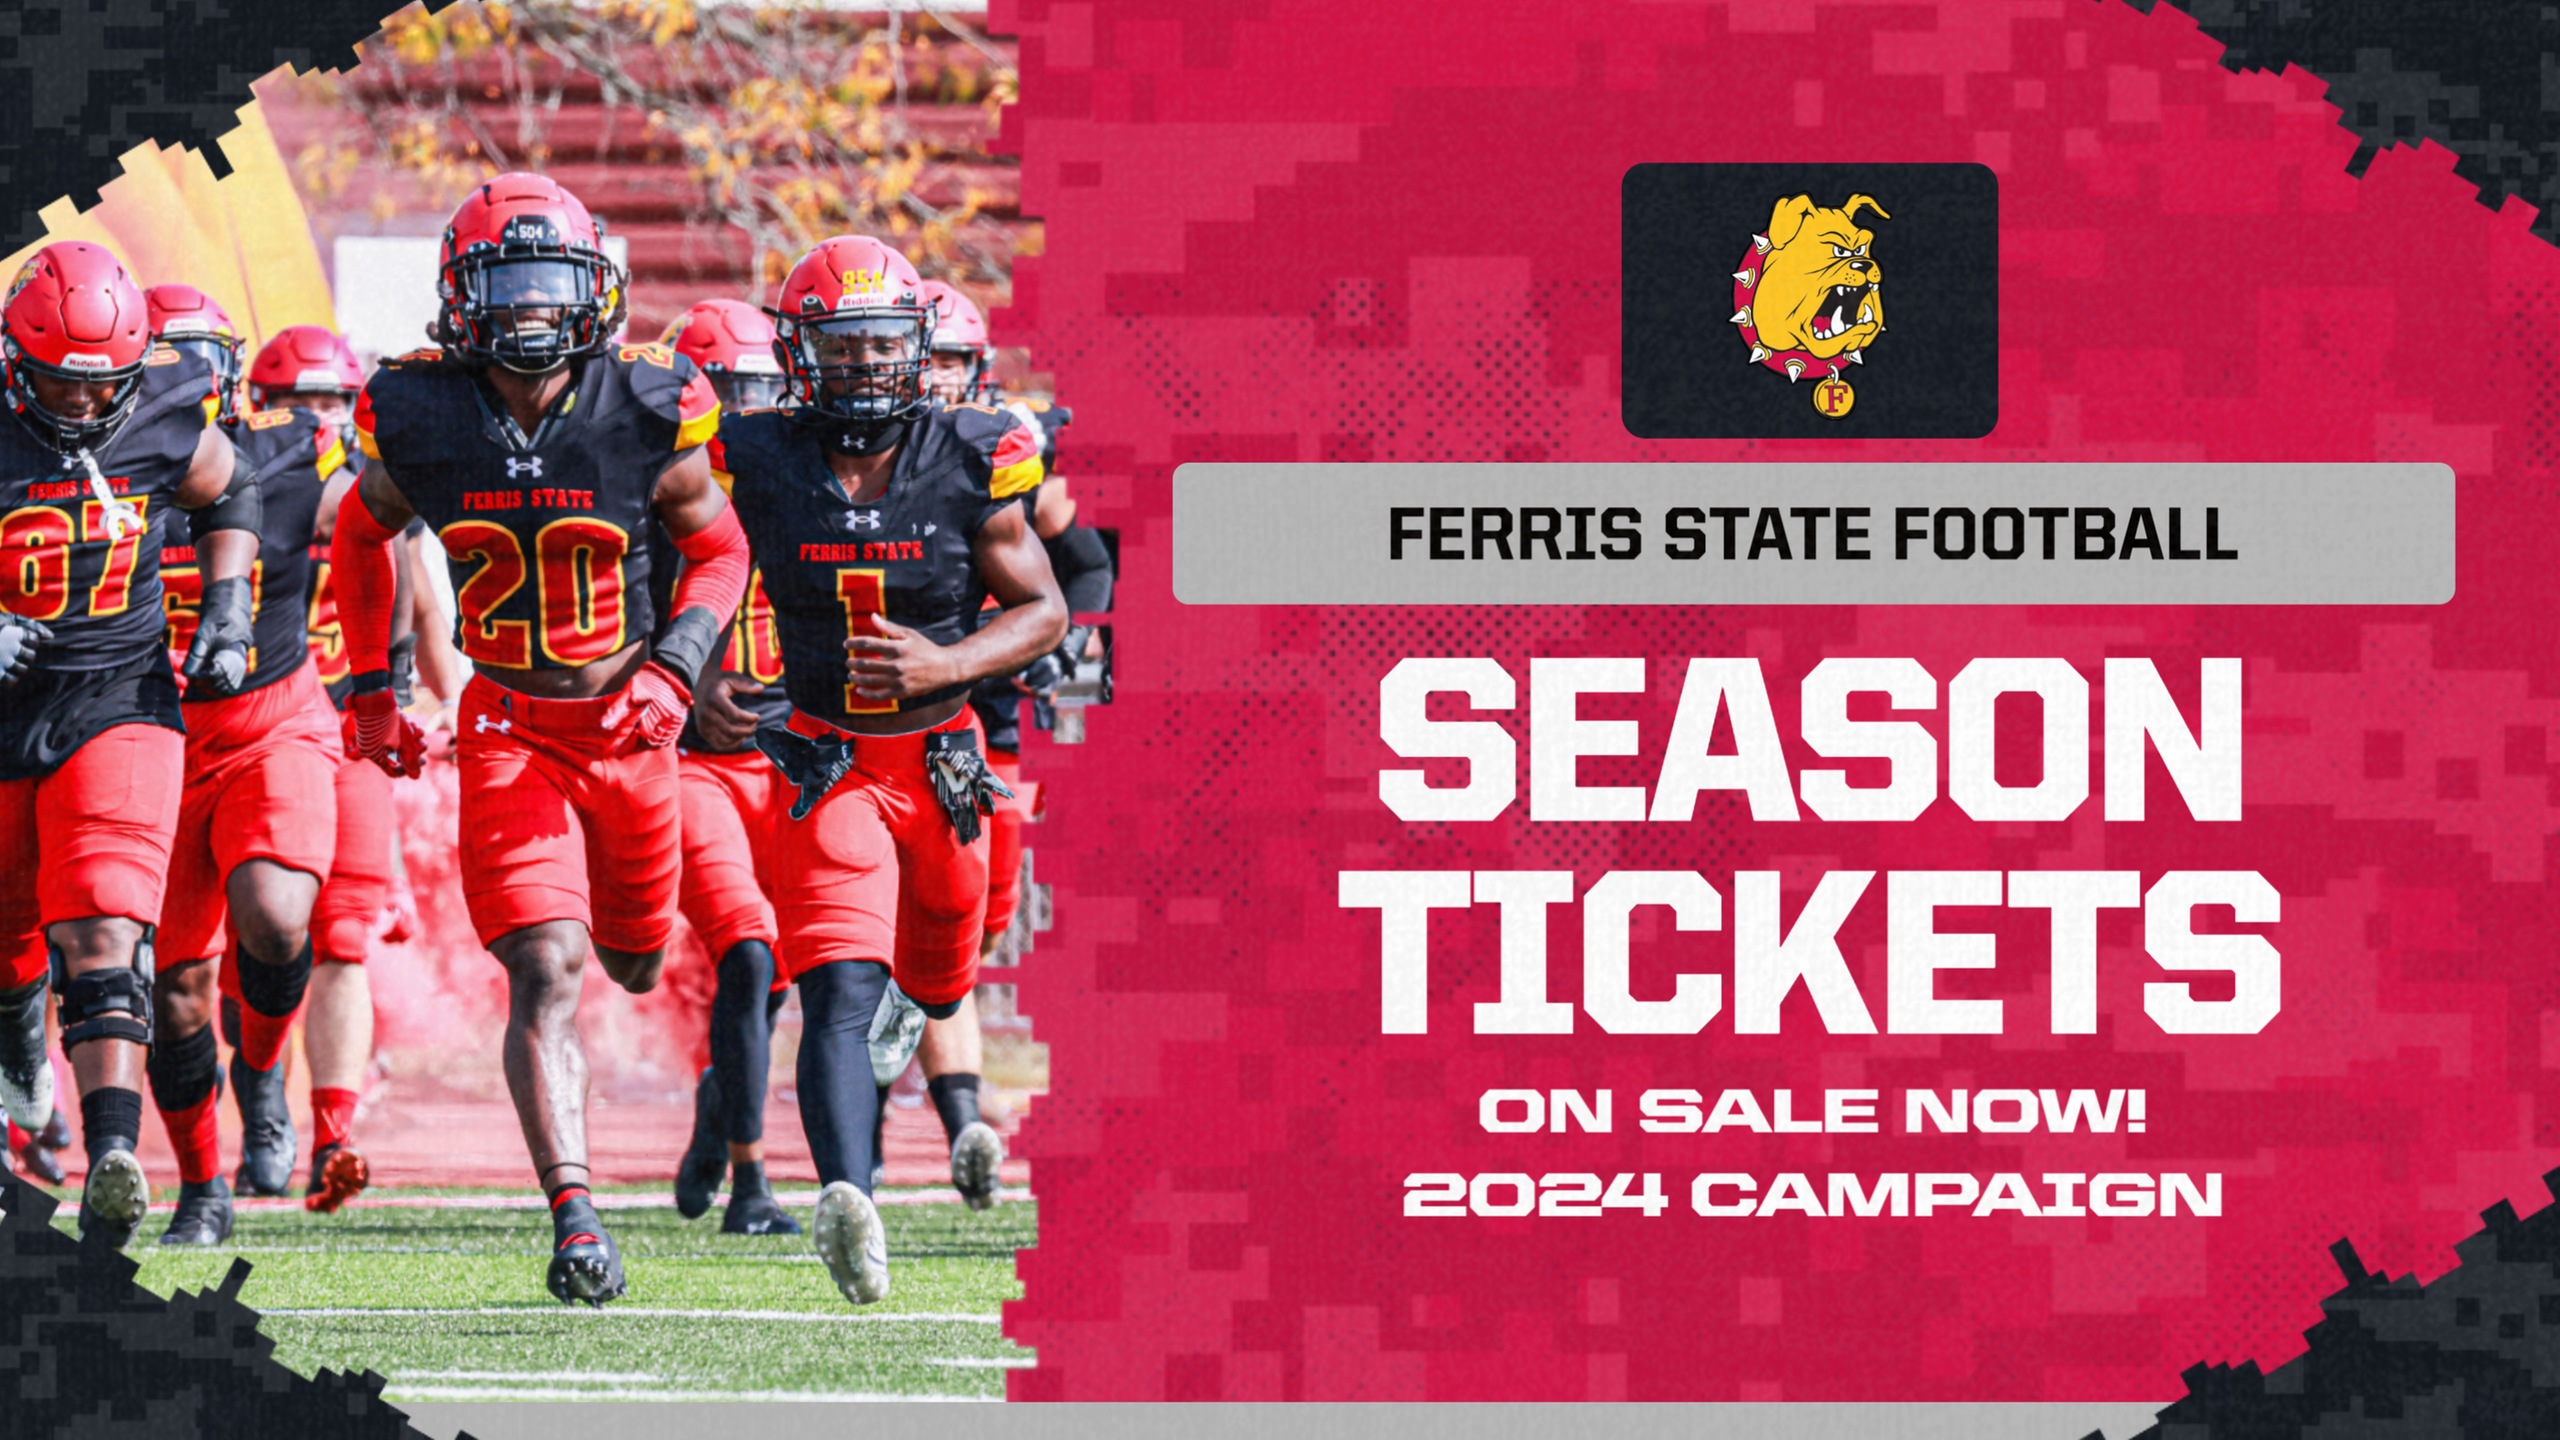 Ferris State Football Season Tickets For 2024 Season On Sale Now!